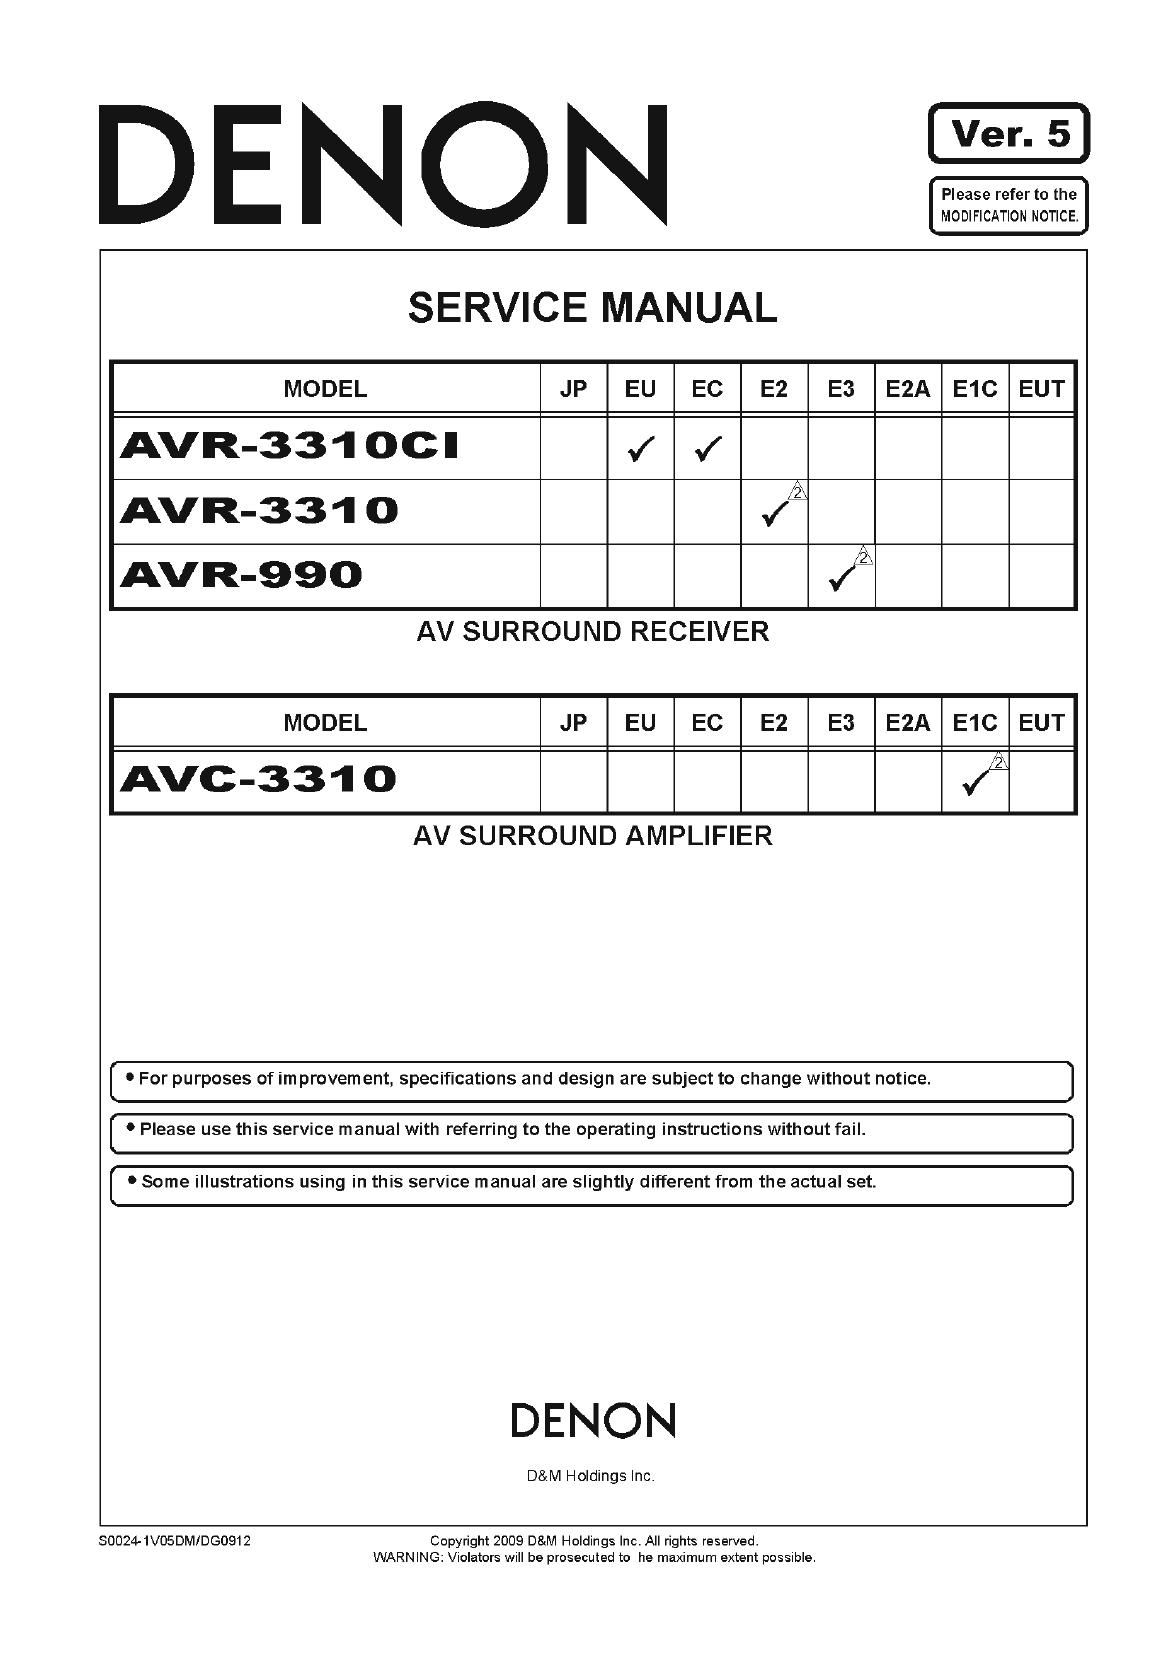 Denon AVR 990 Service Manual